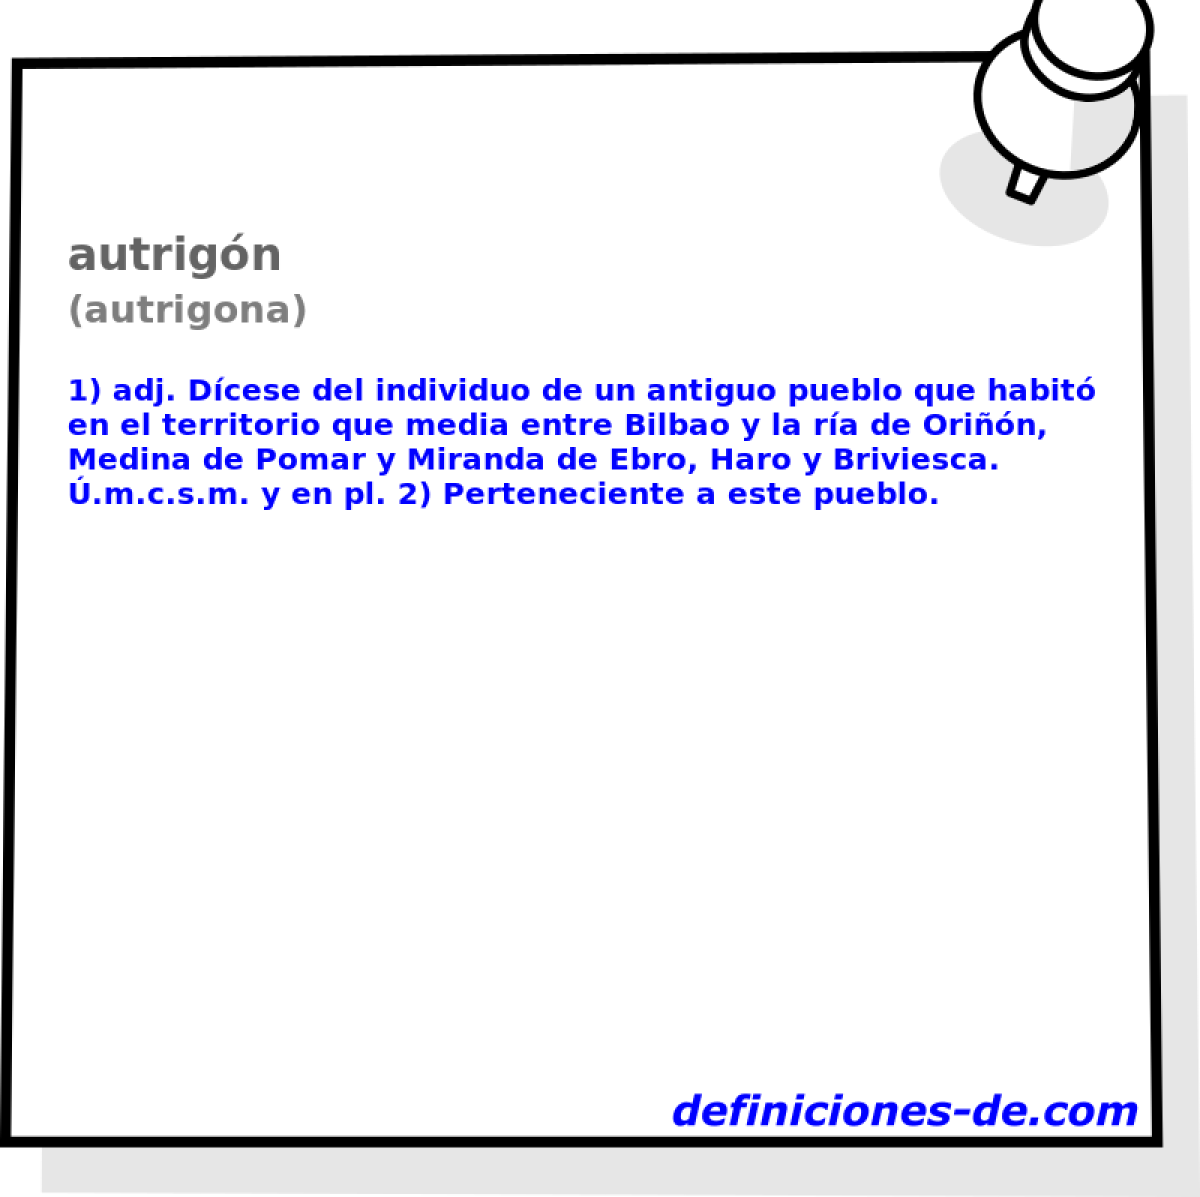 autrign (autrigona)